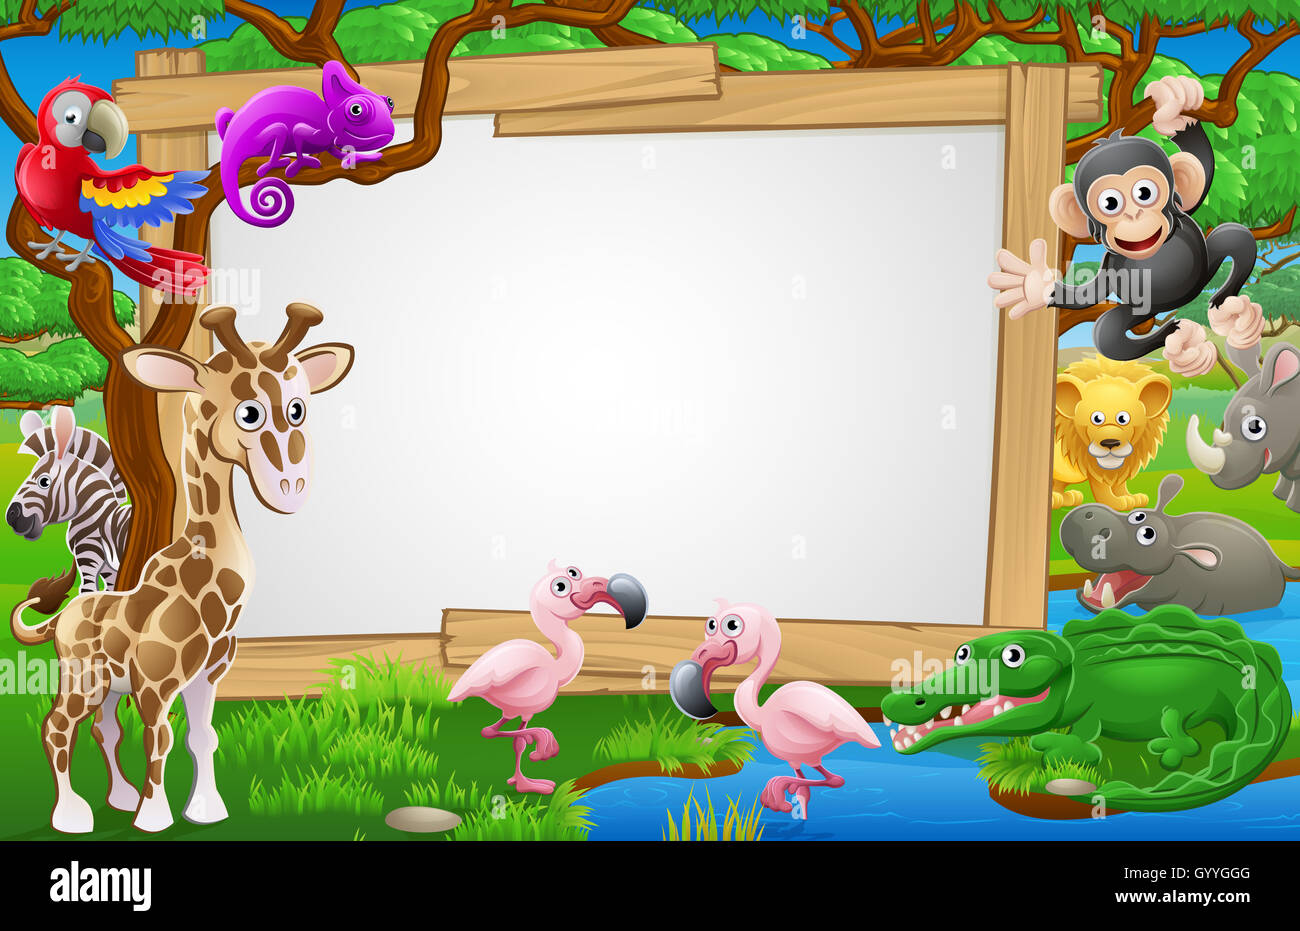 A sign surrounded by cute cartoon safari animals like flamingoes, giraffe, zebra lions and the like. Stock Photo